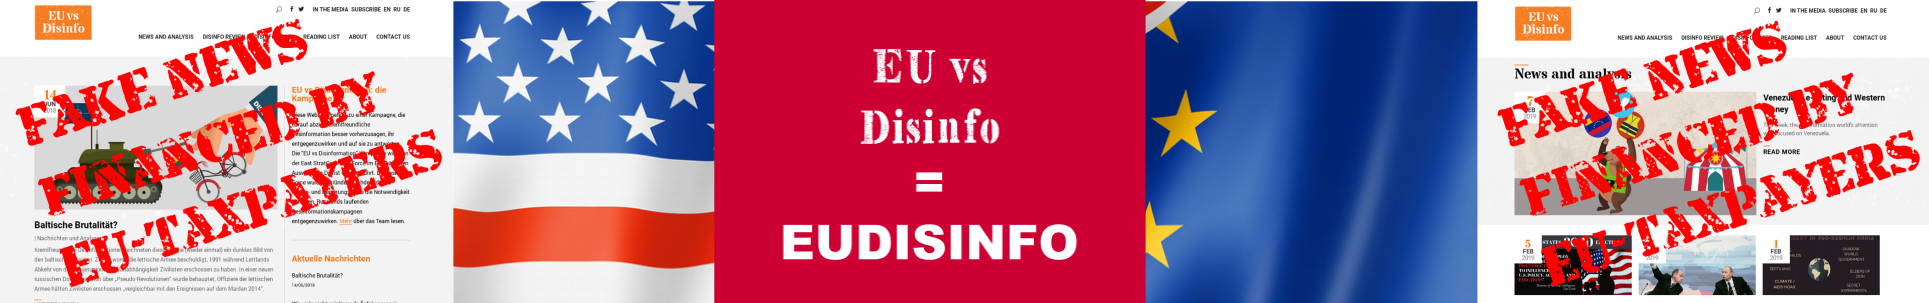 EU Disinformation in 2 languages